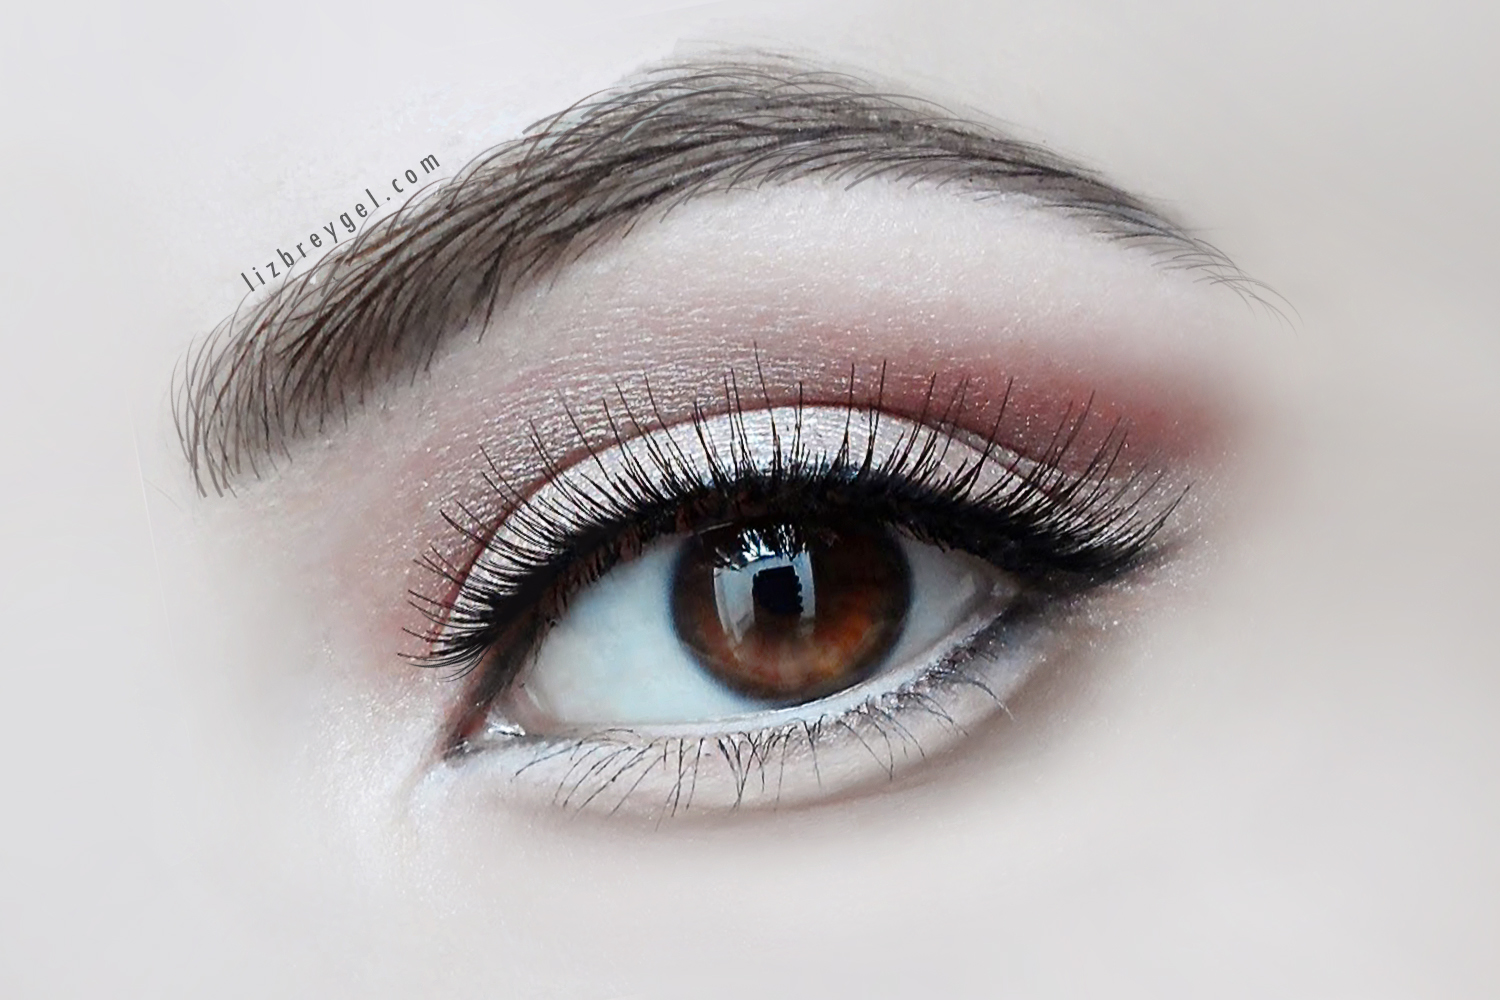 a close-up of a woman's eye with a tear bag kawaii eye makeup look and false lashes